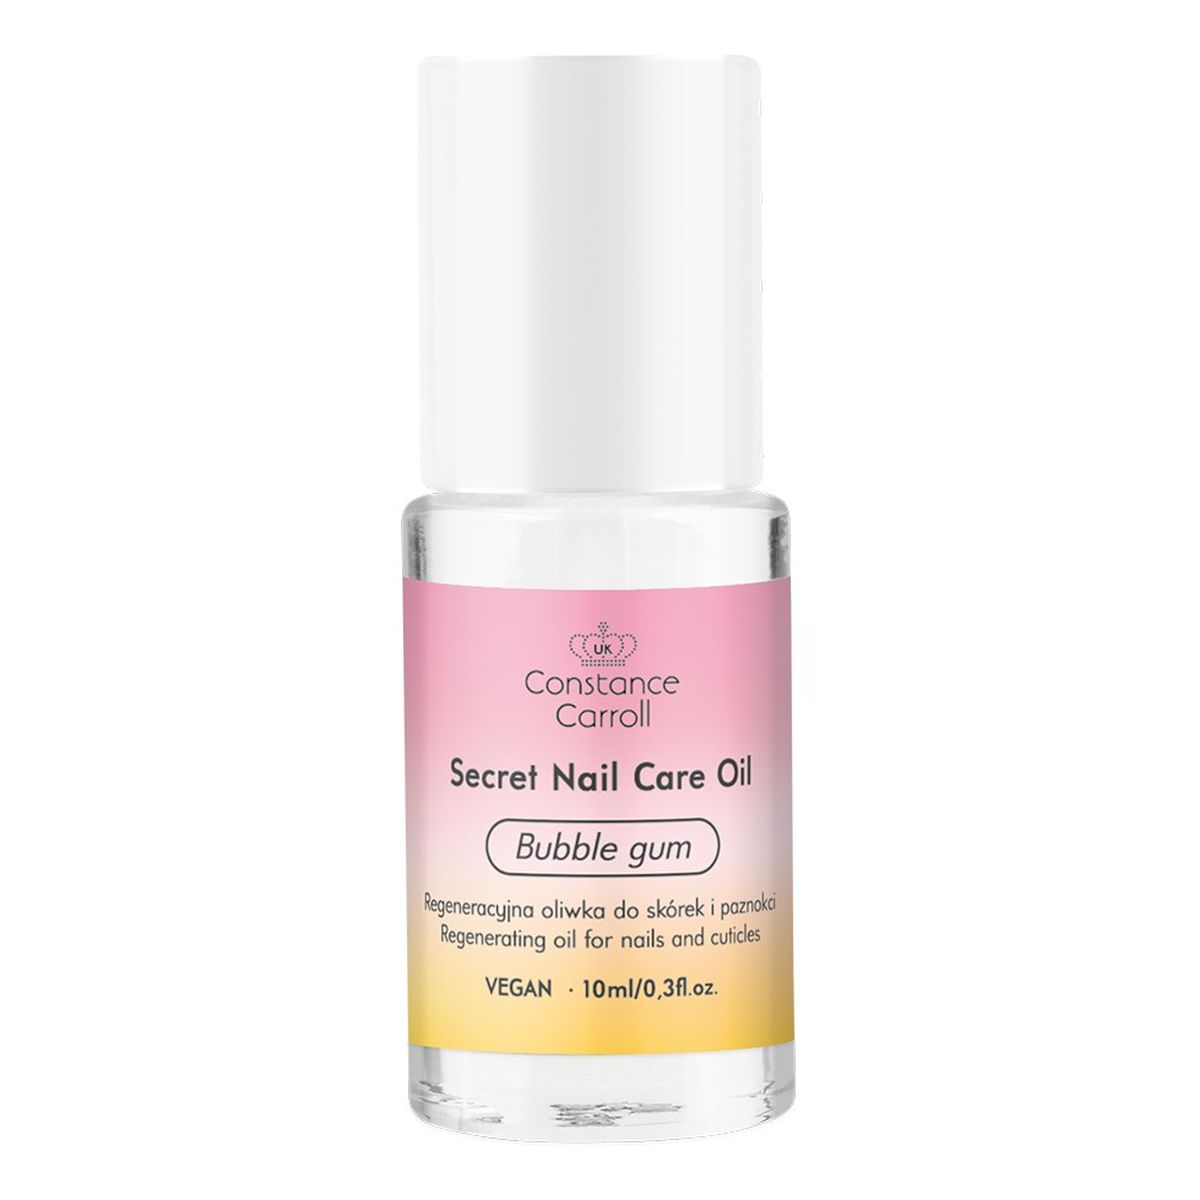 Constance Carroll Secret Nail Care Oil Regeneracyjna Oliwka do skórek i paznokci - Bubble Gum 10ml